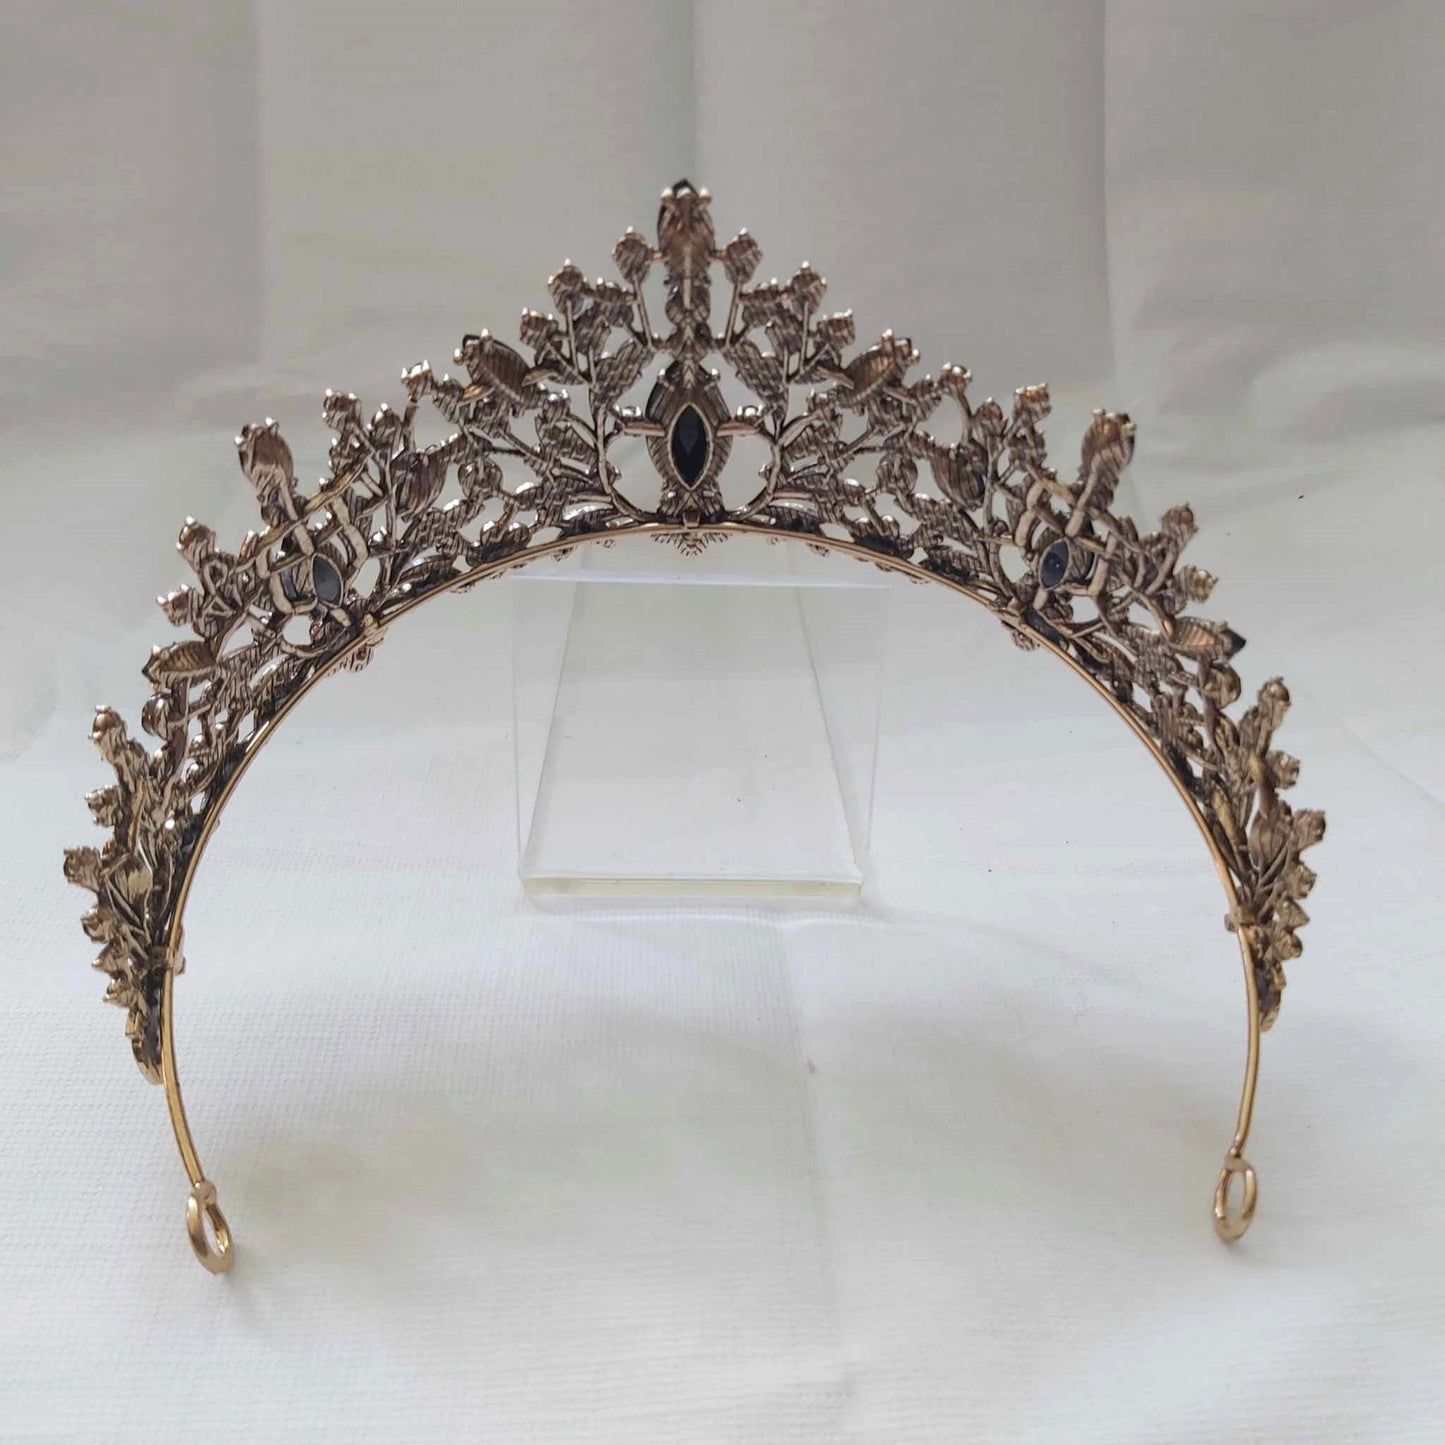 Black Rhinestones Crown Tiara Baroque Handmade (CR47)